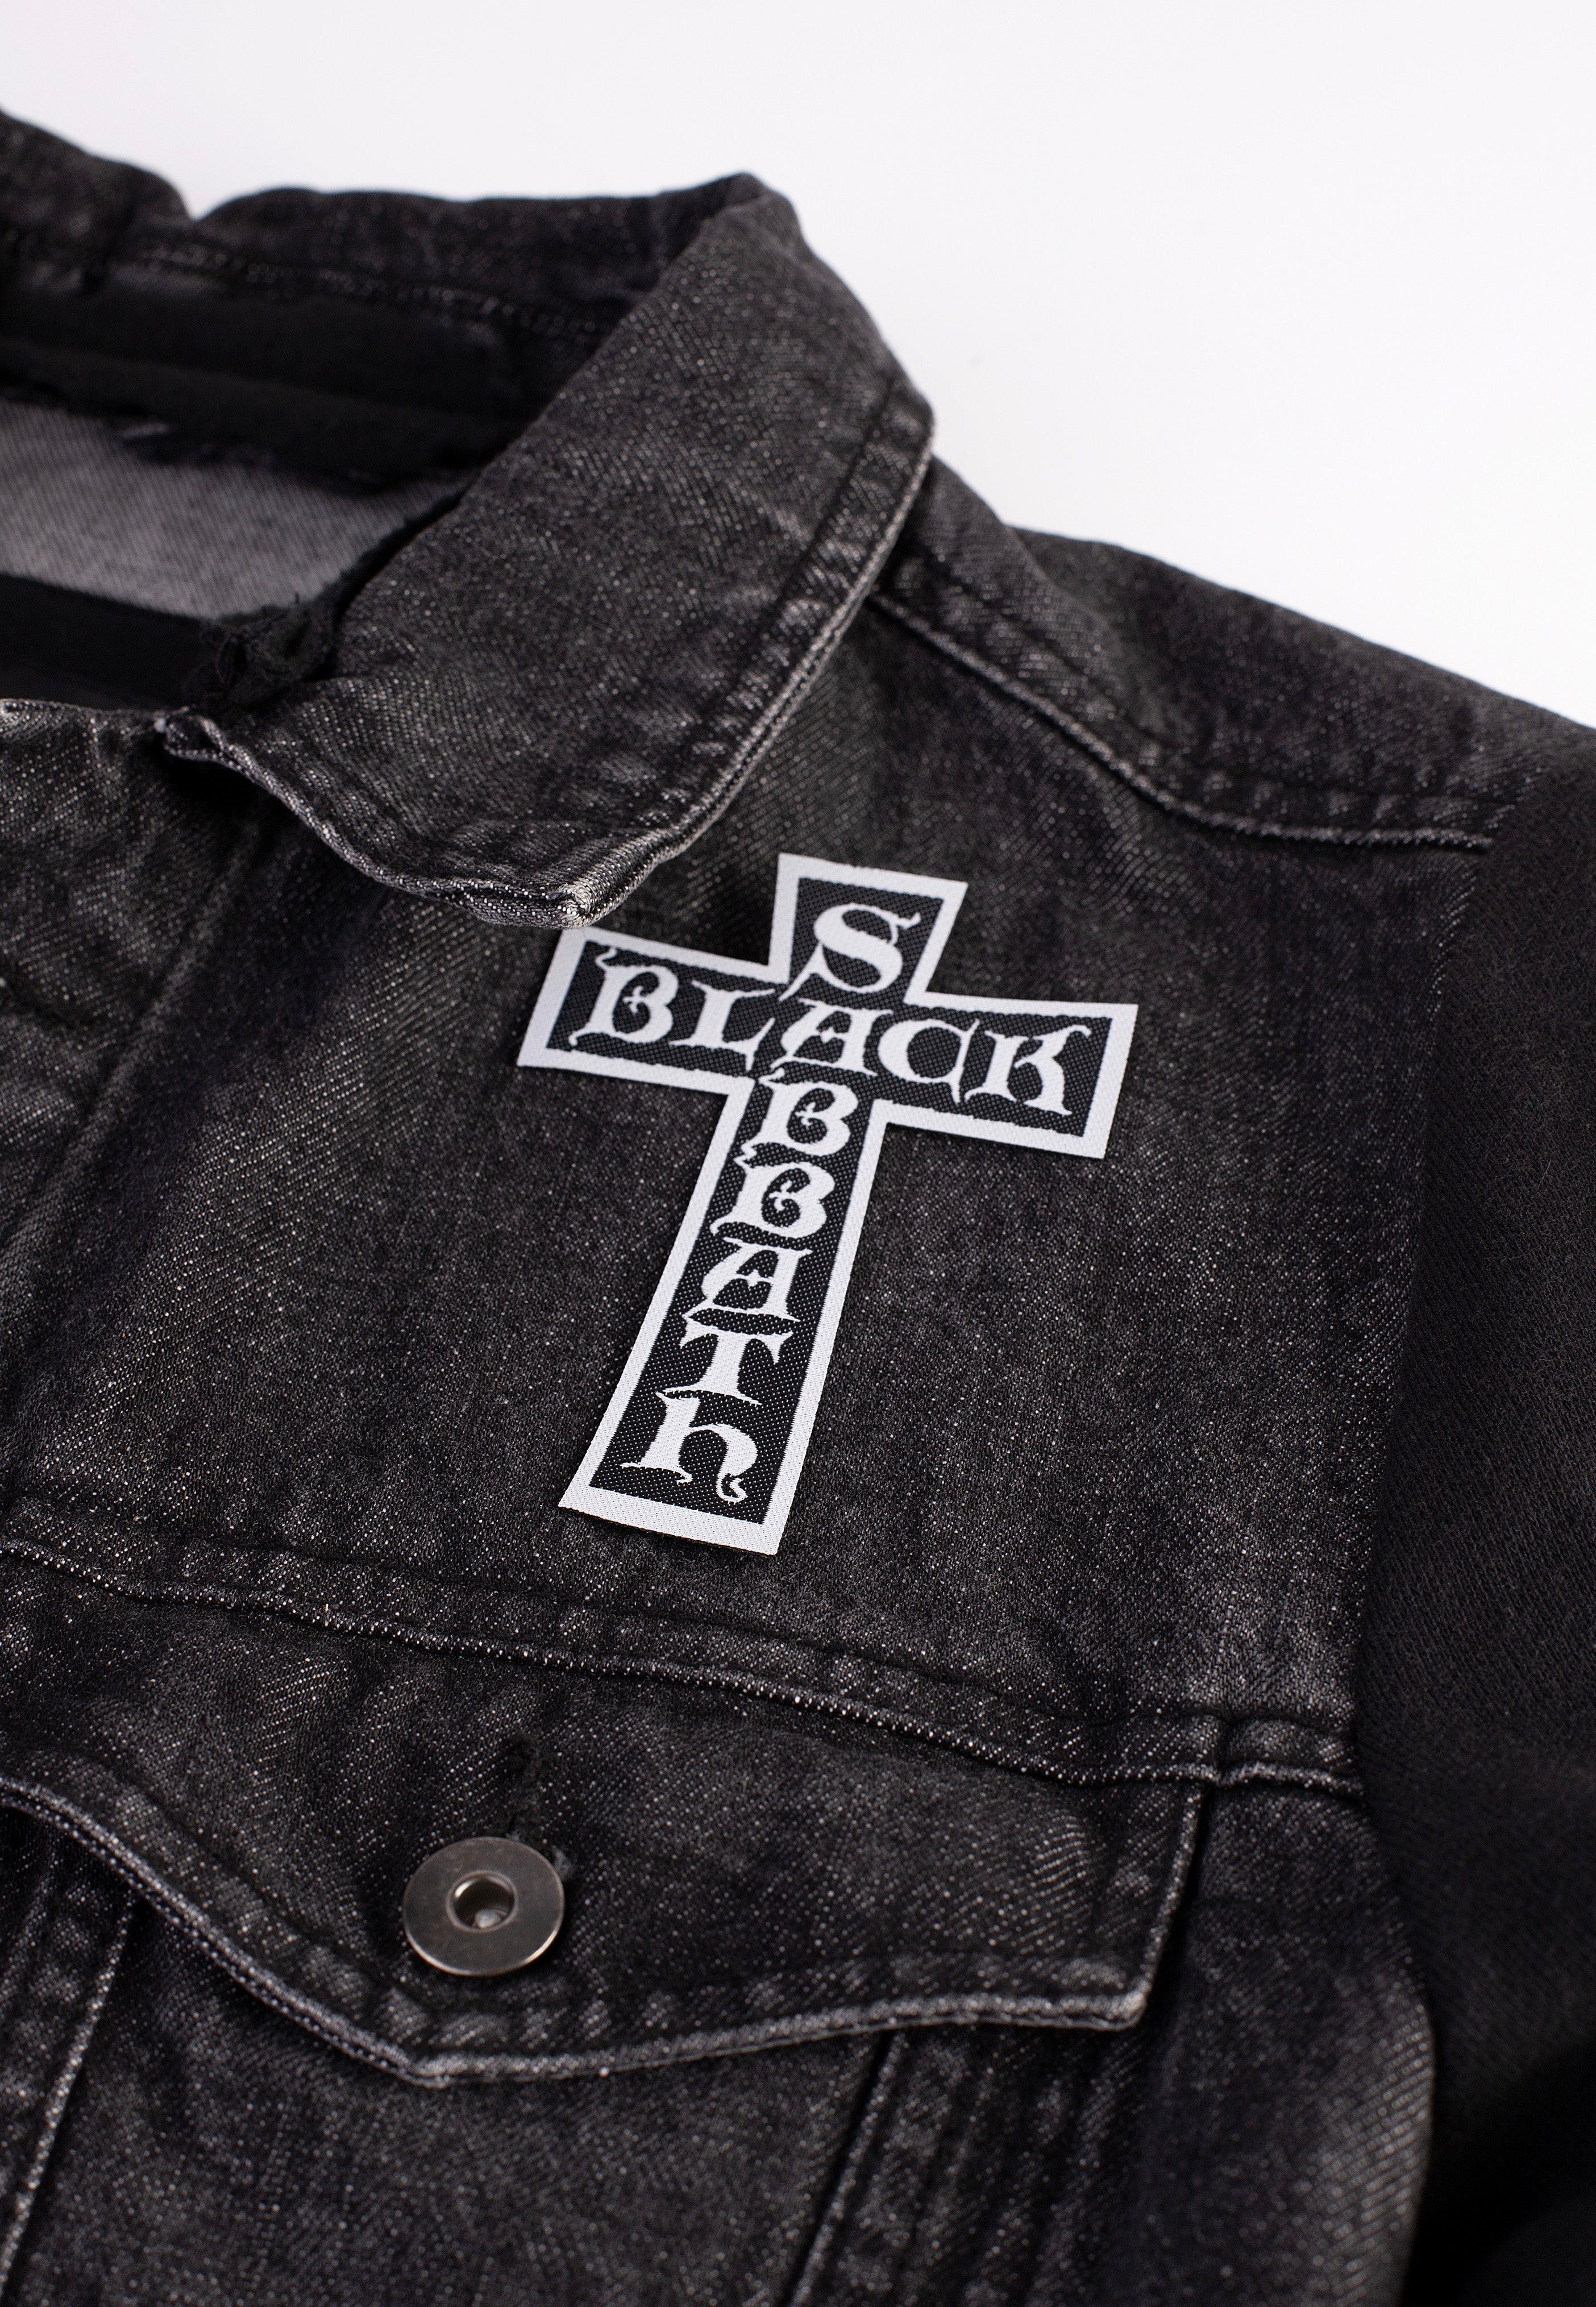 Black Sabbath - Cross Logo Cut Out - Patch